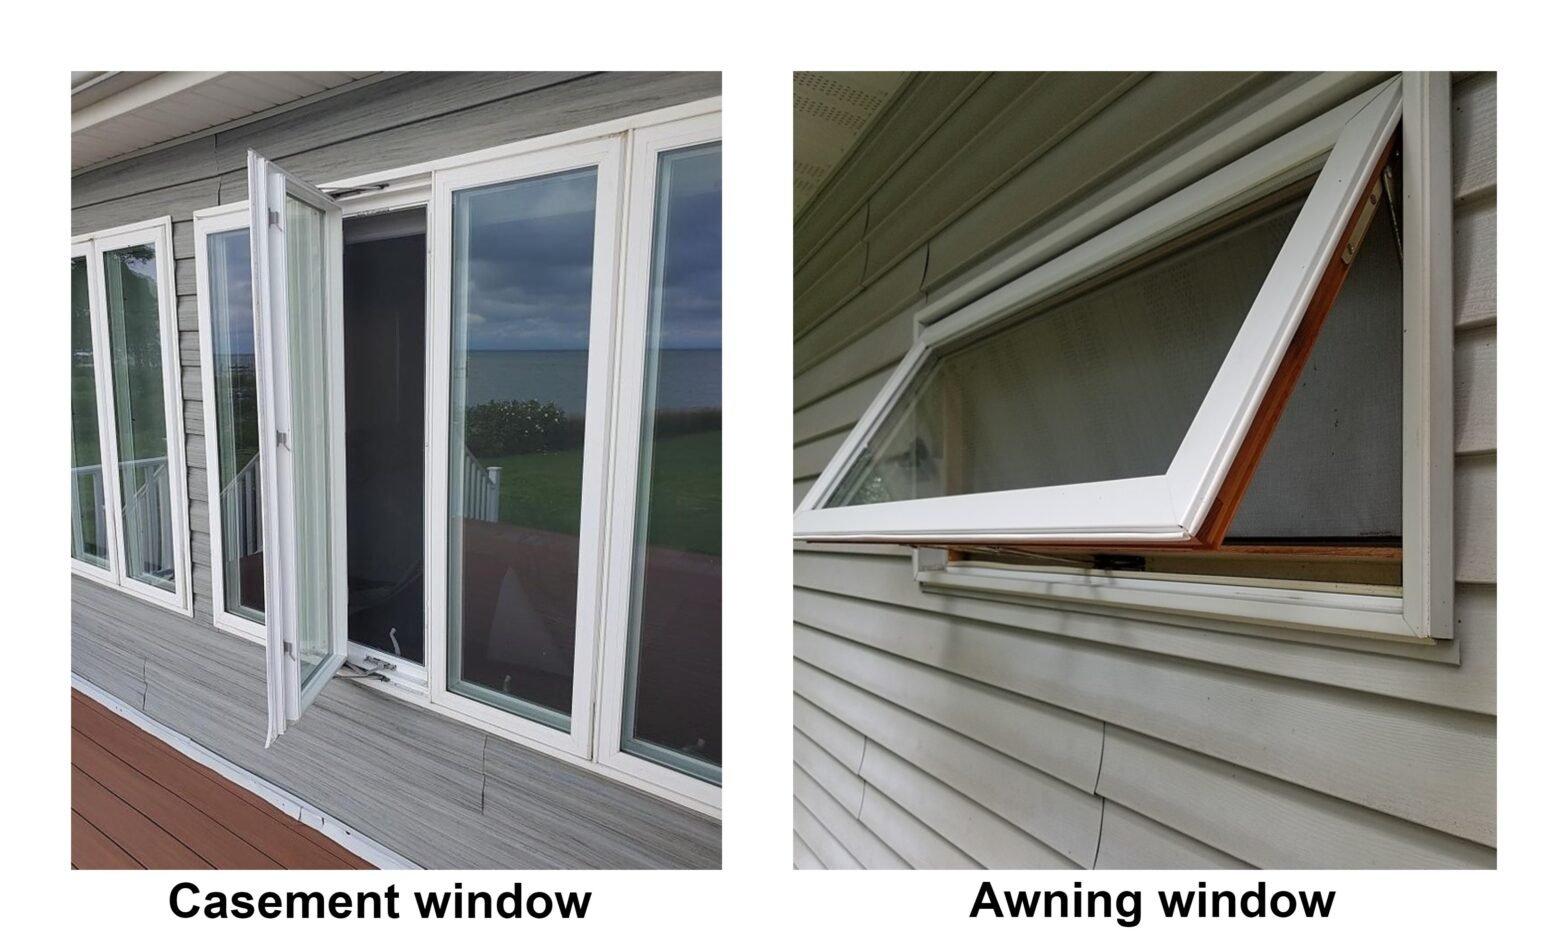 Awning Windows vs Casement